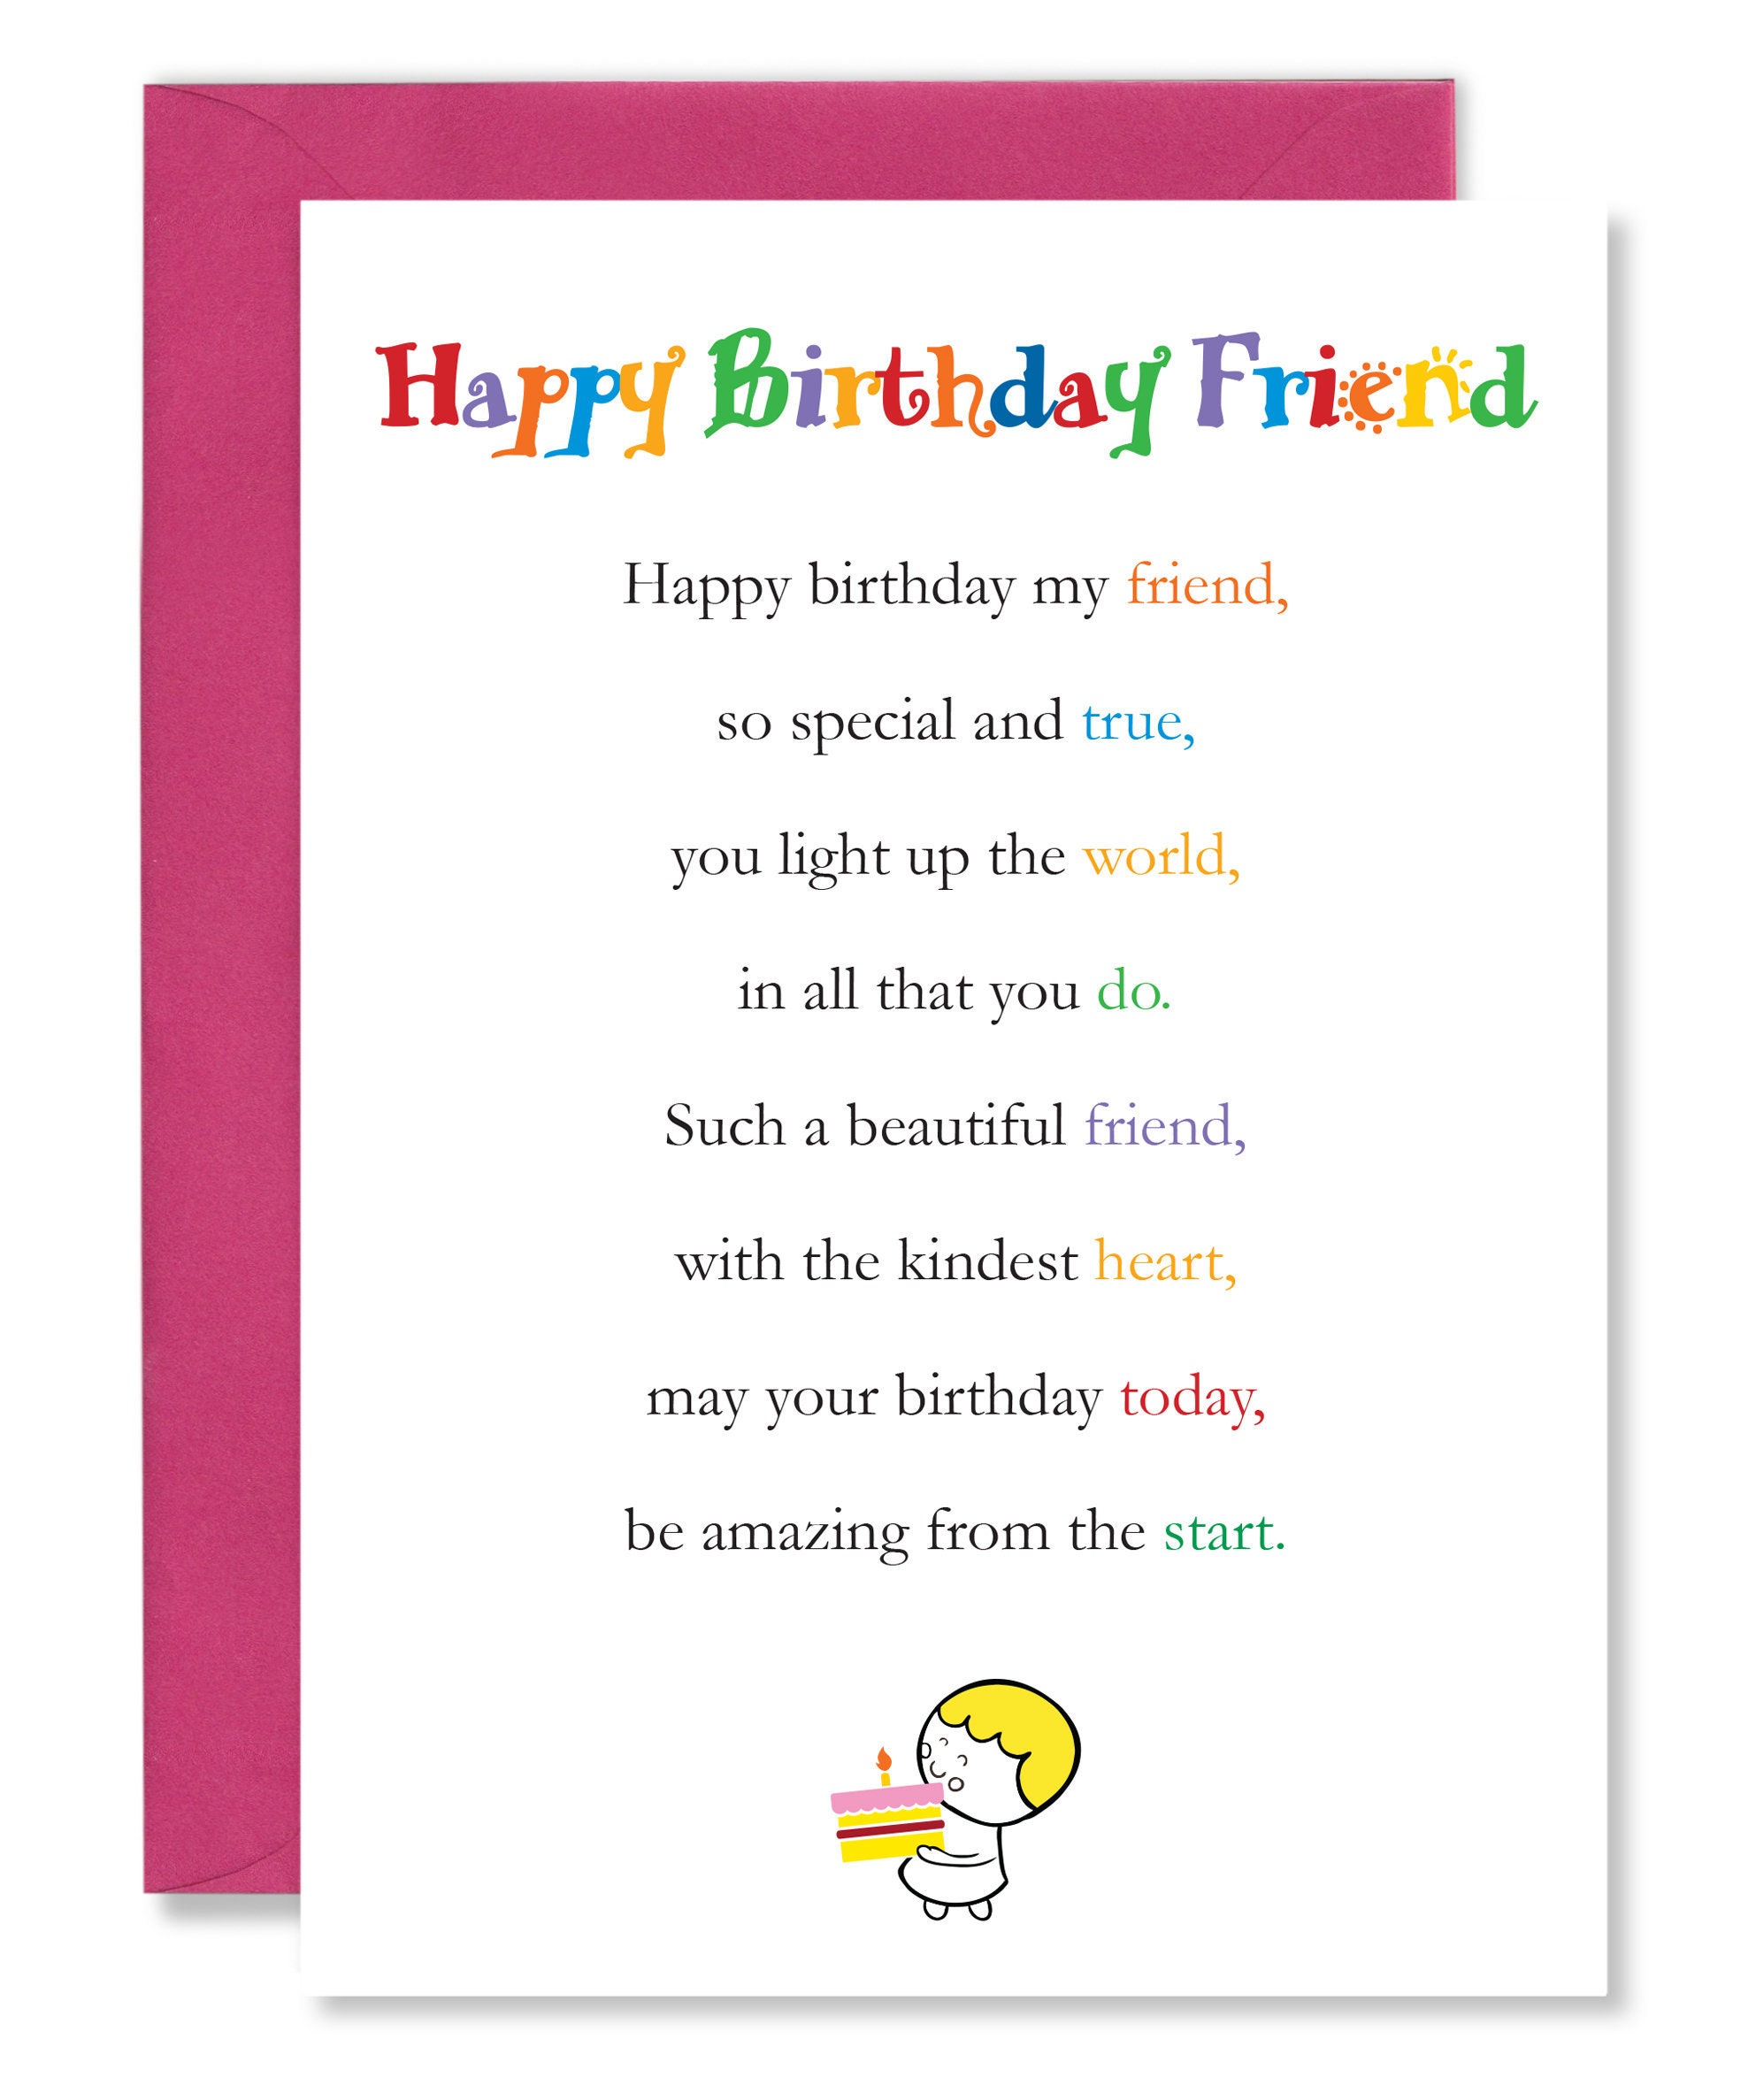 Happy Birthday Friend Greetings Card With Beautiful Poem Friendship